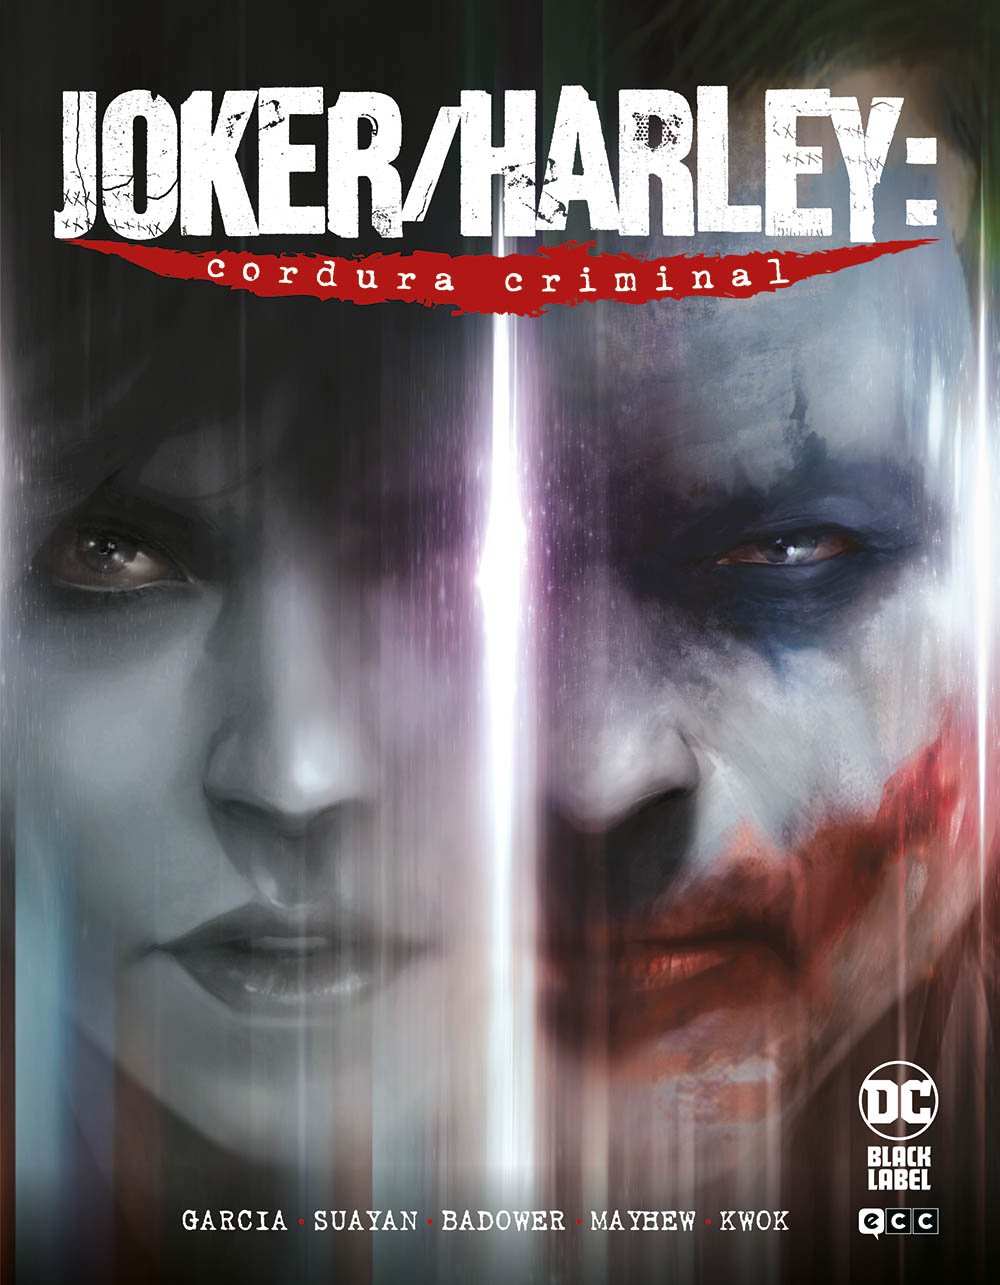 Joker/Harley: Criminal - ECC